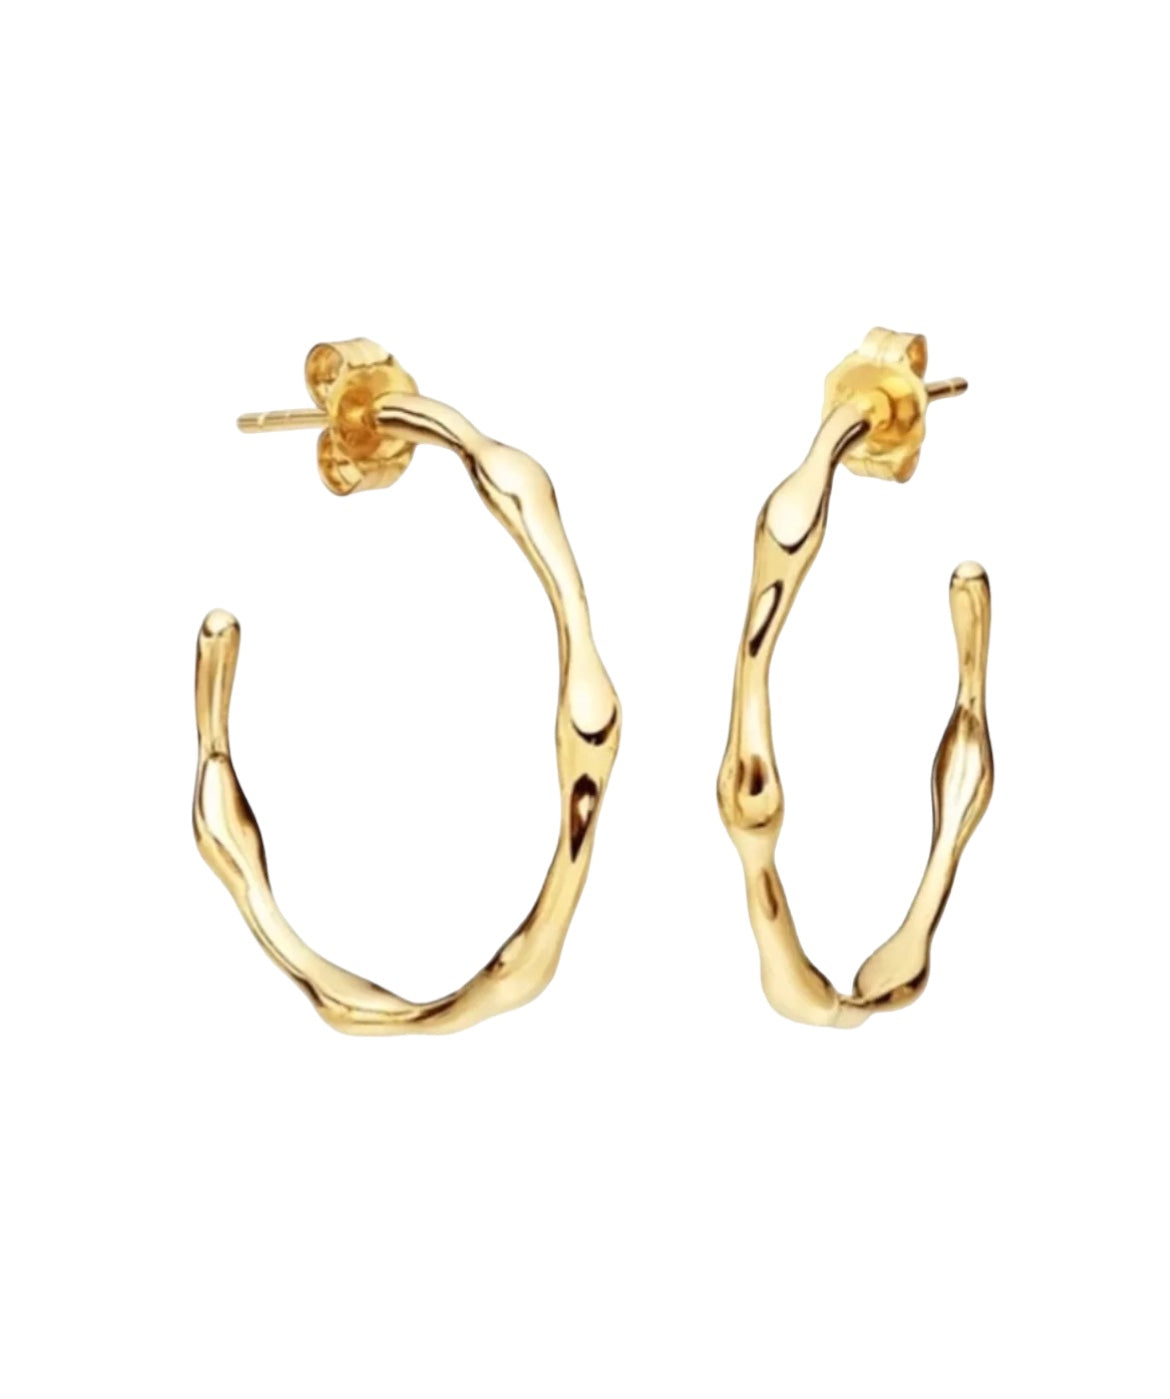 Goldene Ohrringe mit 18K-Vergoldung